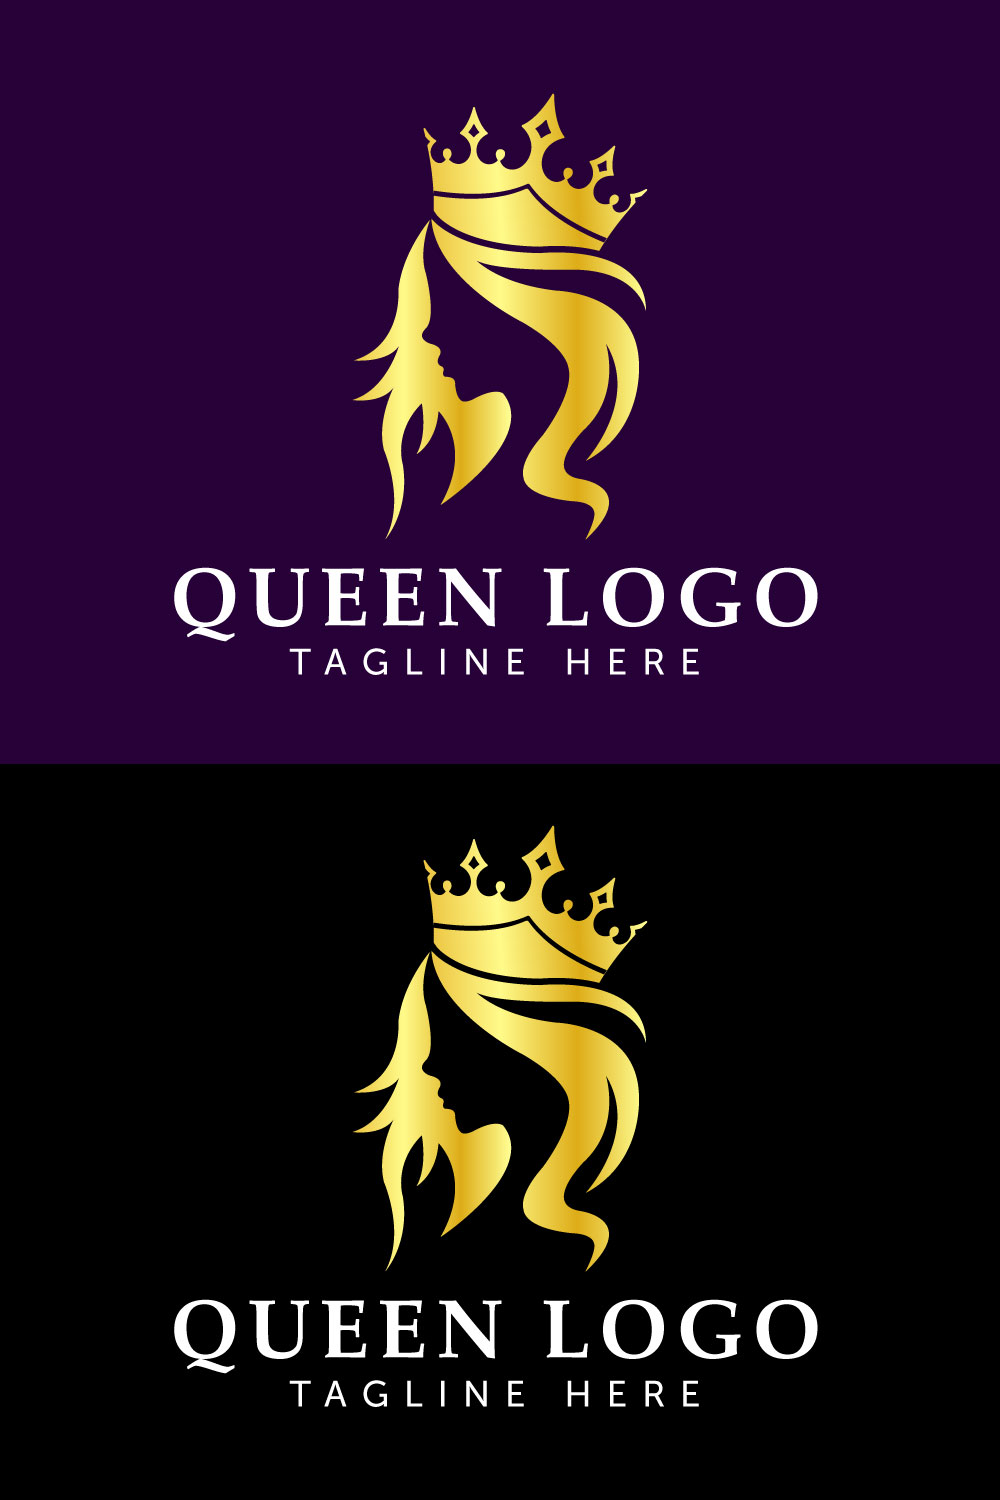 queen logo2 120